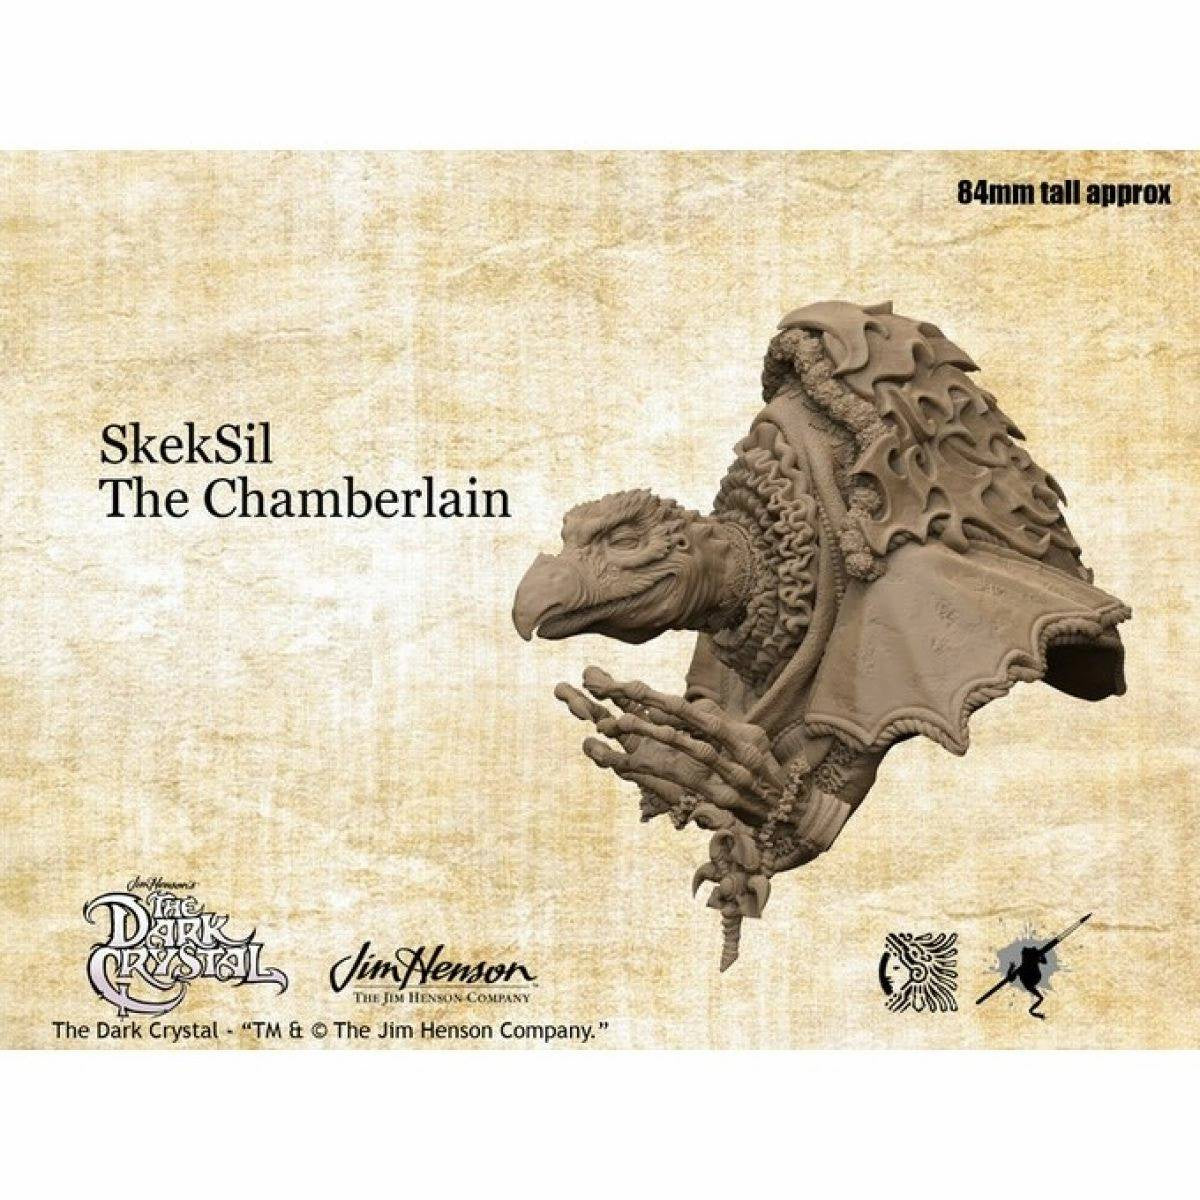 Jim Hensons Collectible Models - SkekSil the Chamberlain